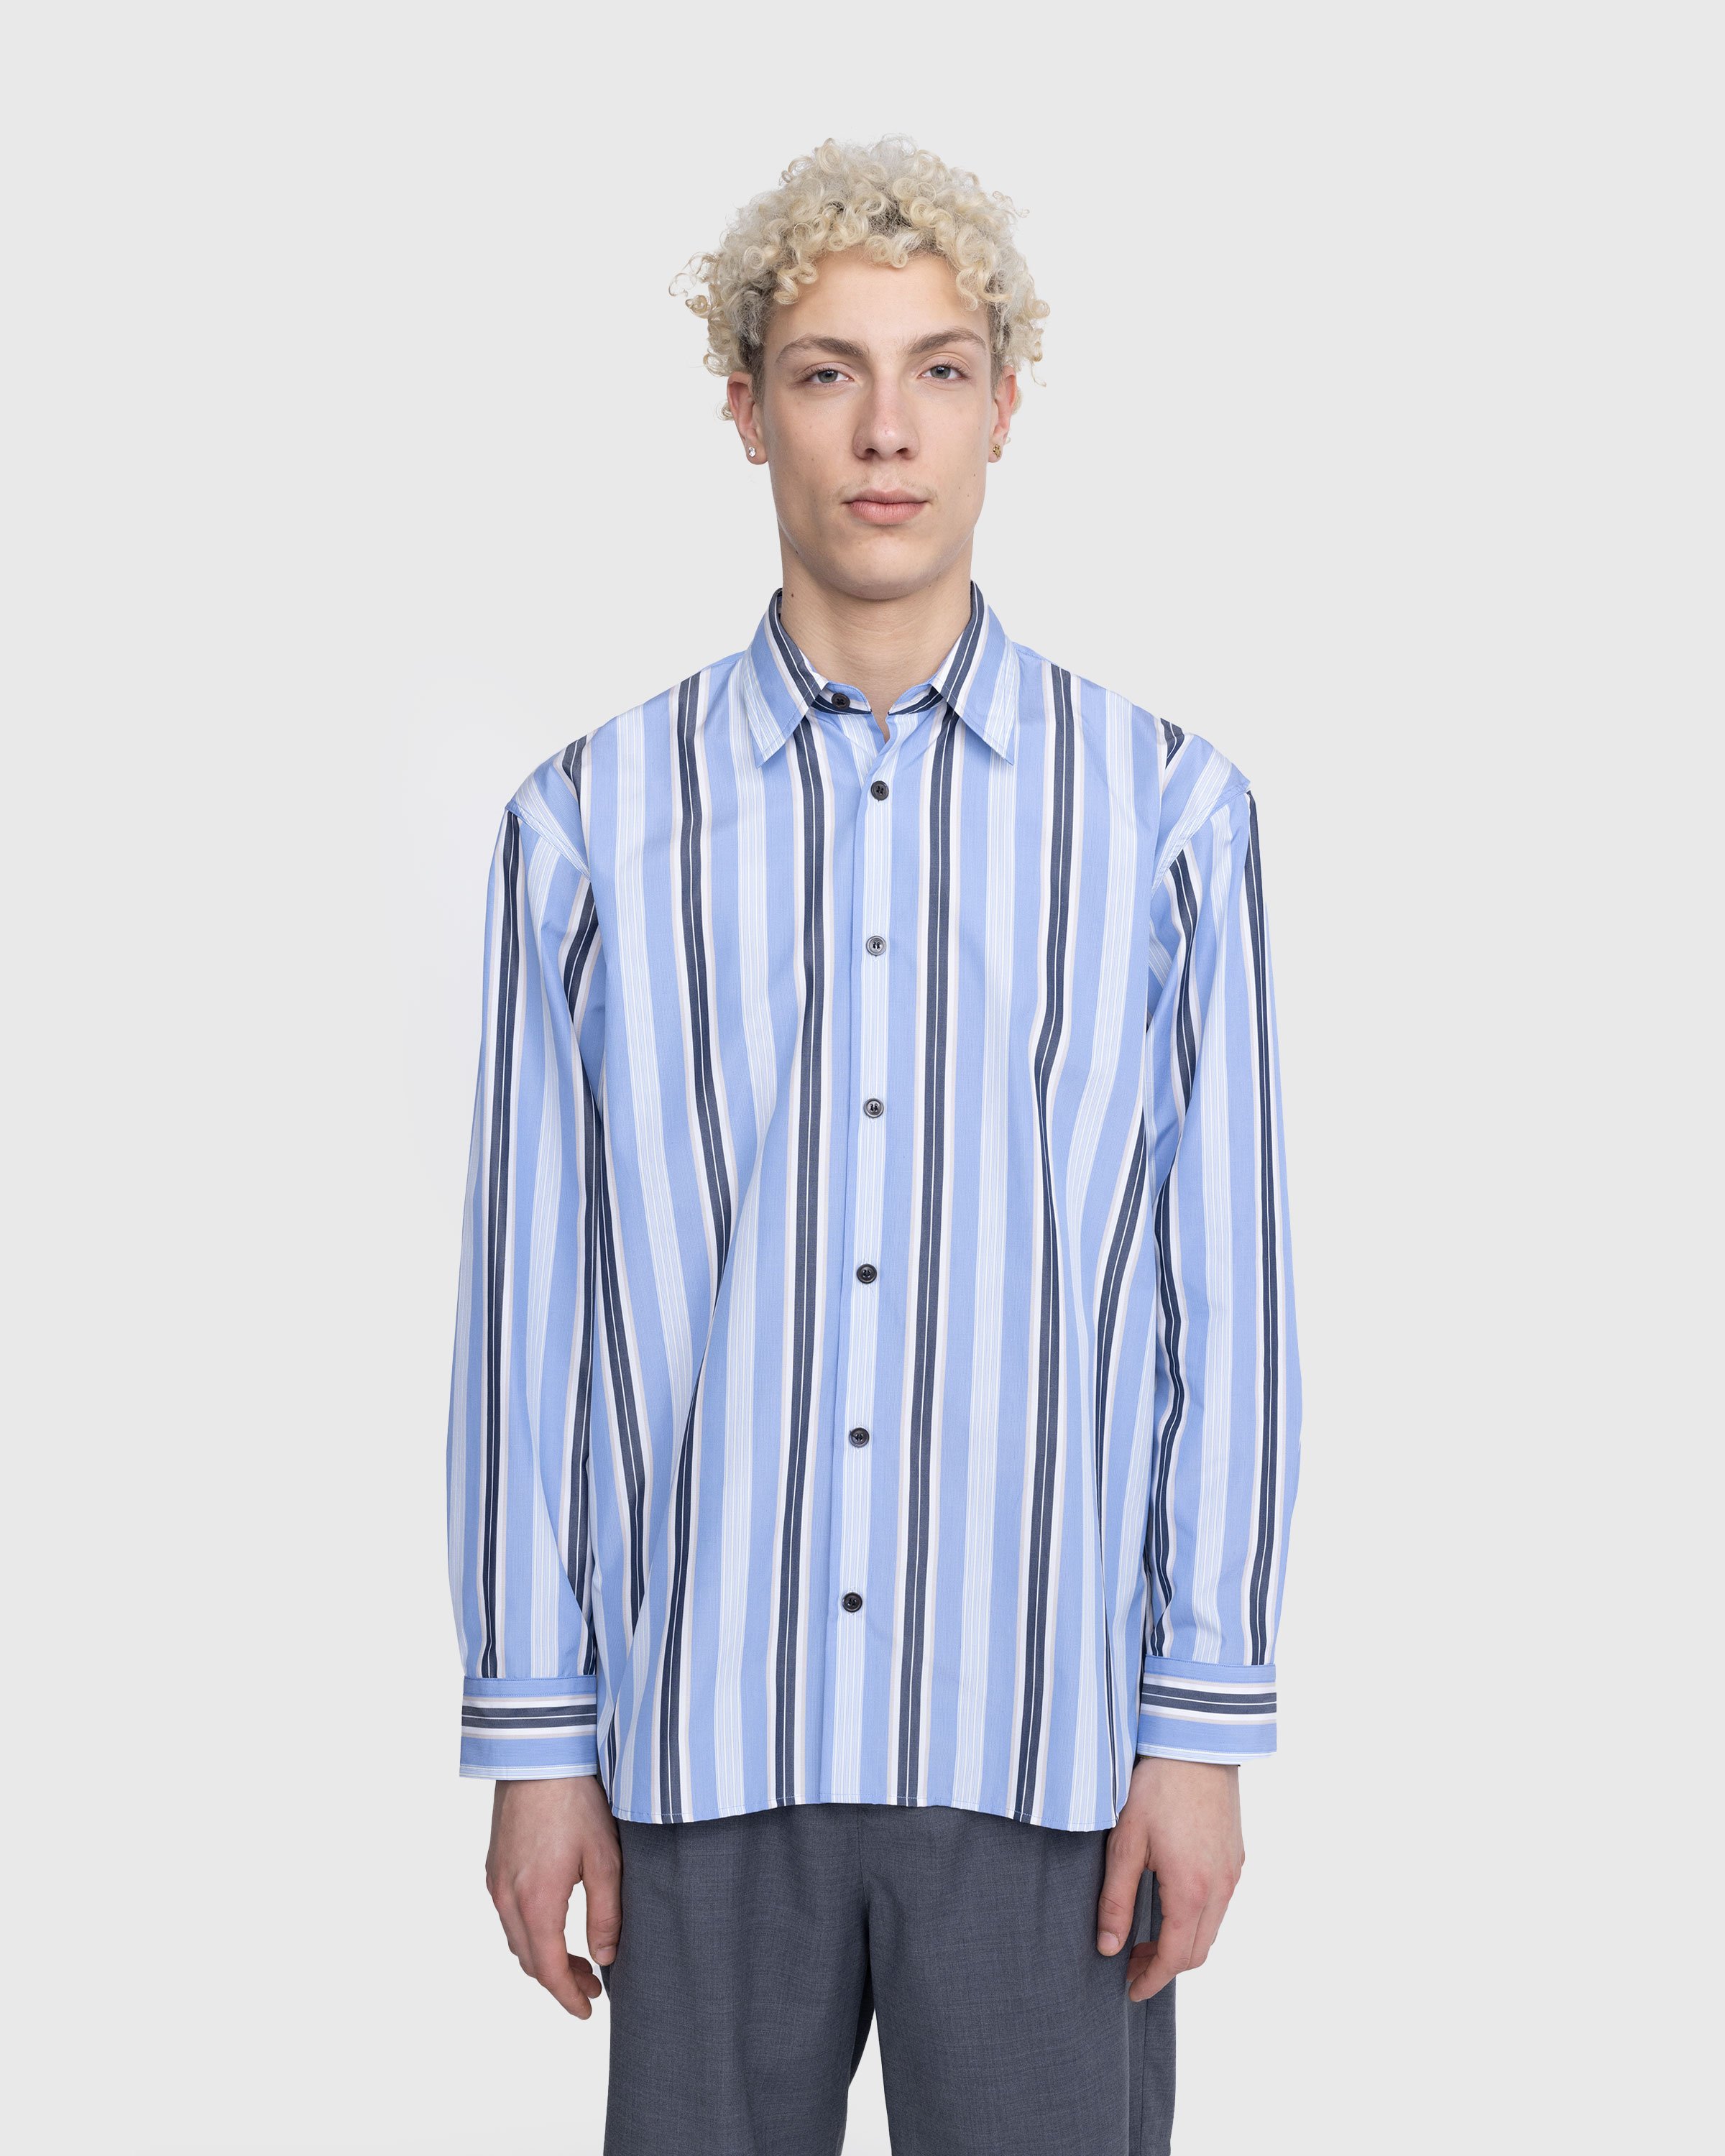 Dries van Noten - Croom Shirt Light Blue - Clothing - Blue - Image 2